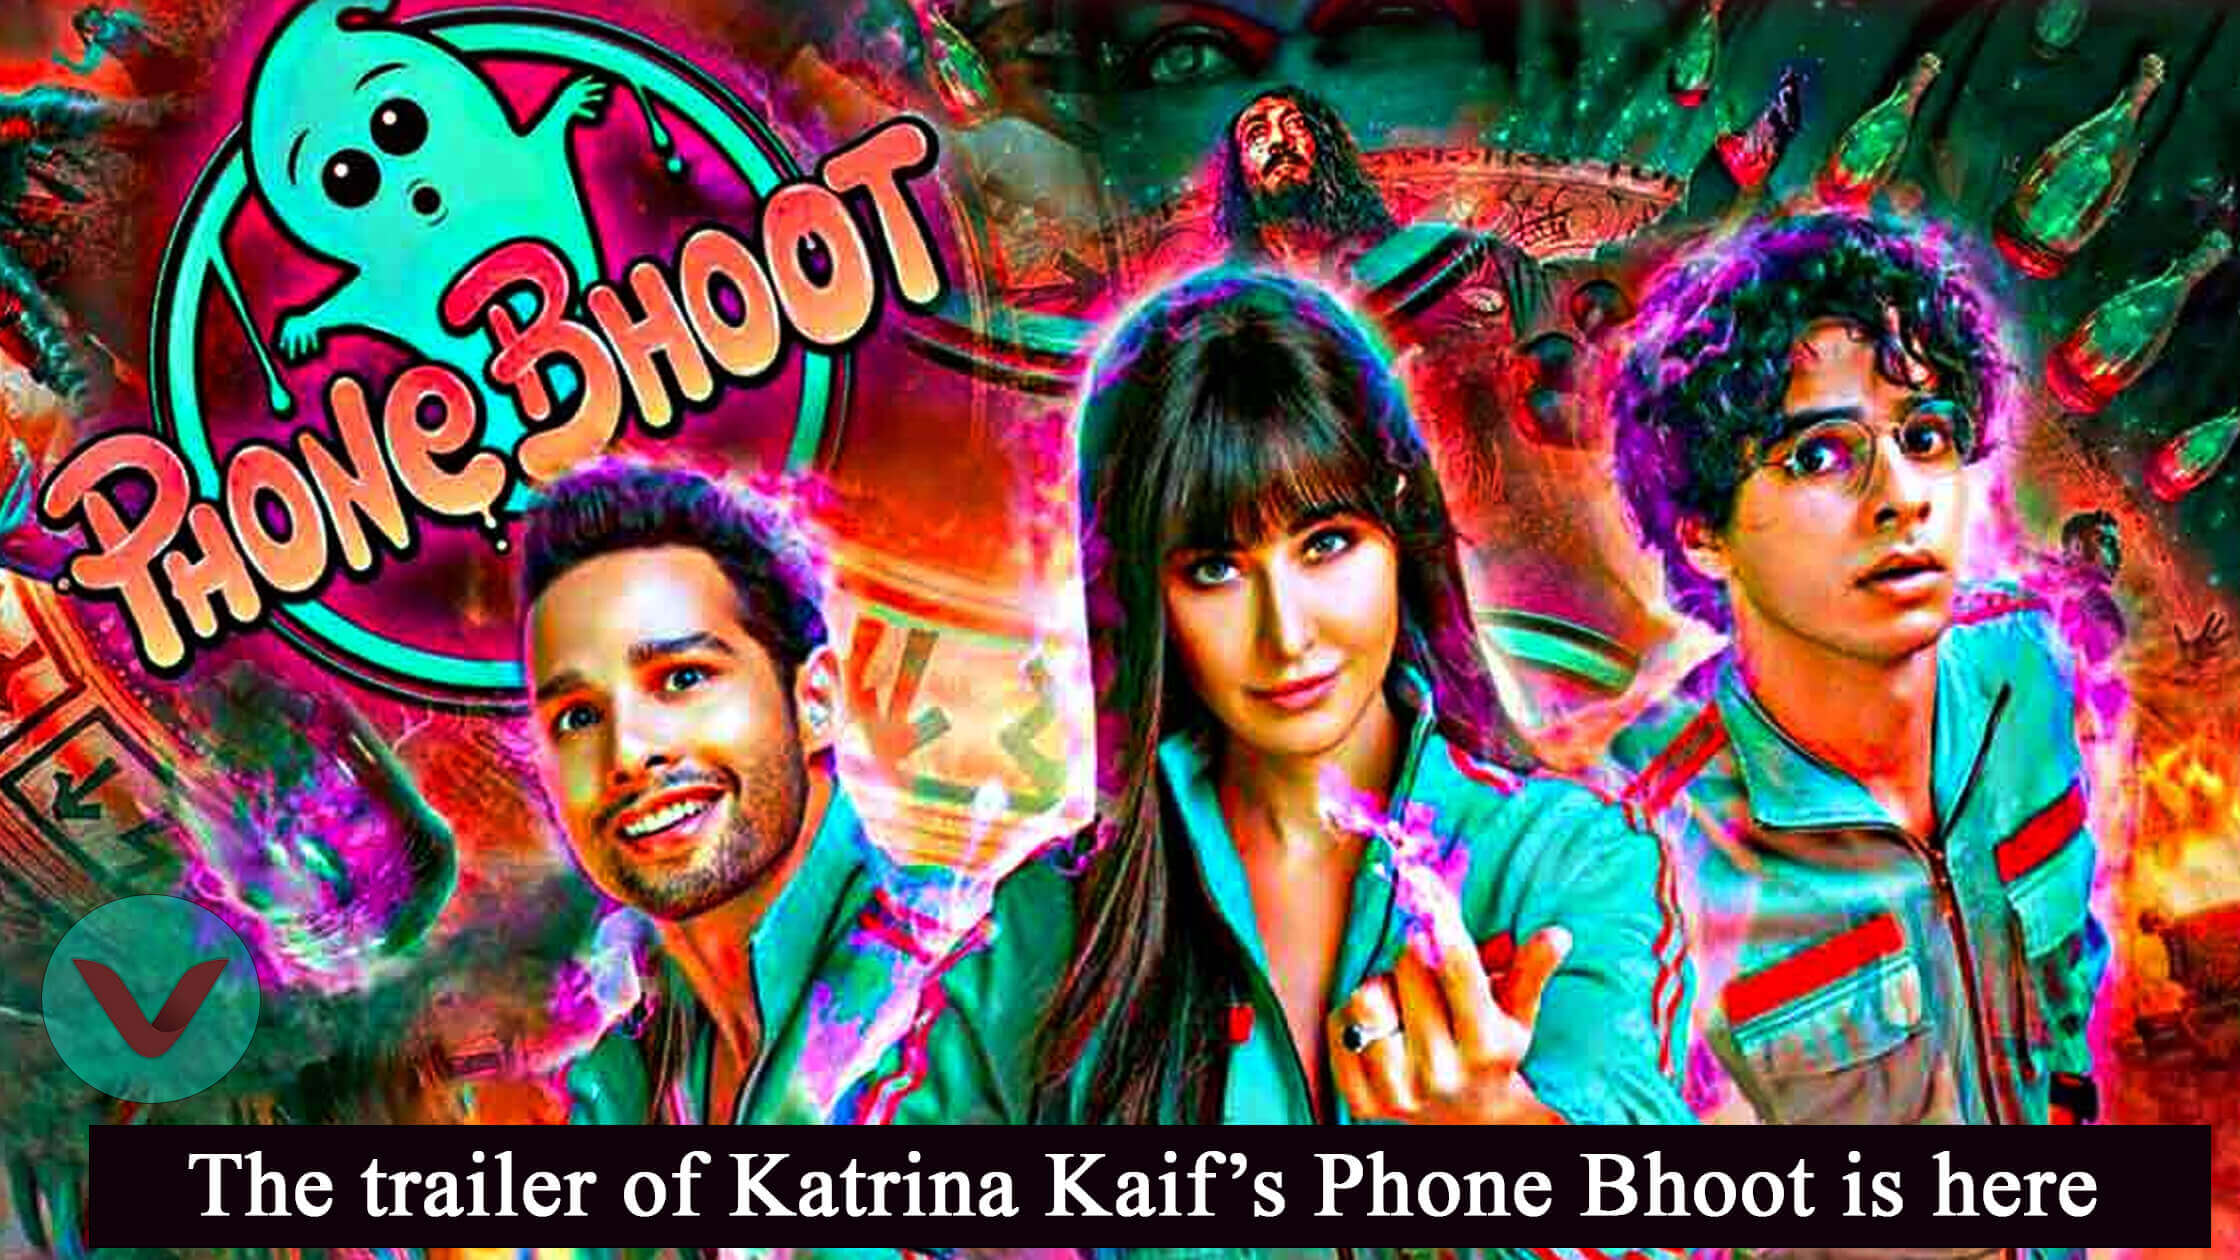 PhoneBhoot The trailer of Katrina Kaif’s Phone Bhoot is here